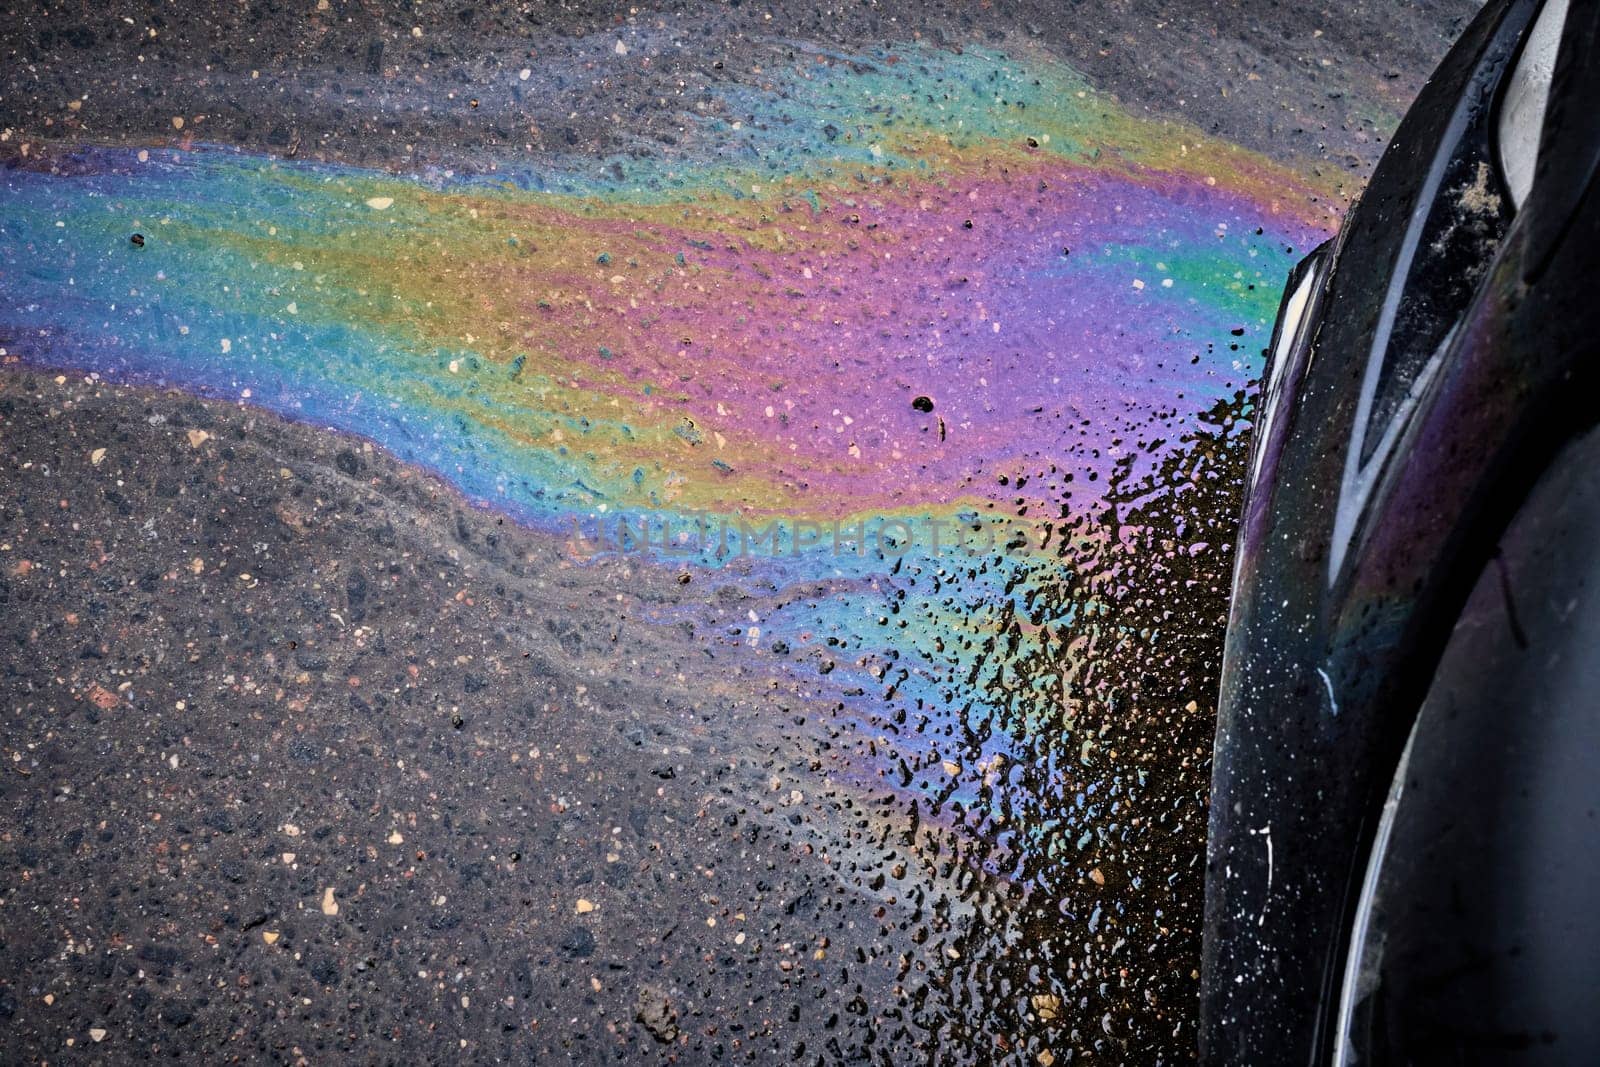 Gasoline and oil spill on wet asphalt in a parking lot near a hypermarket.